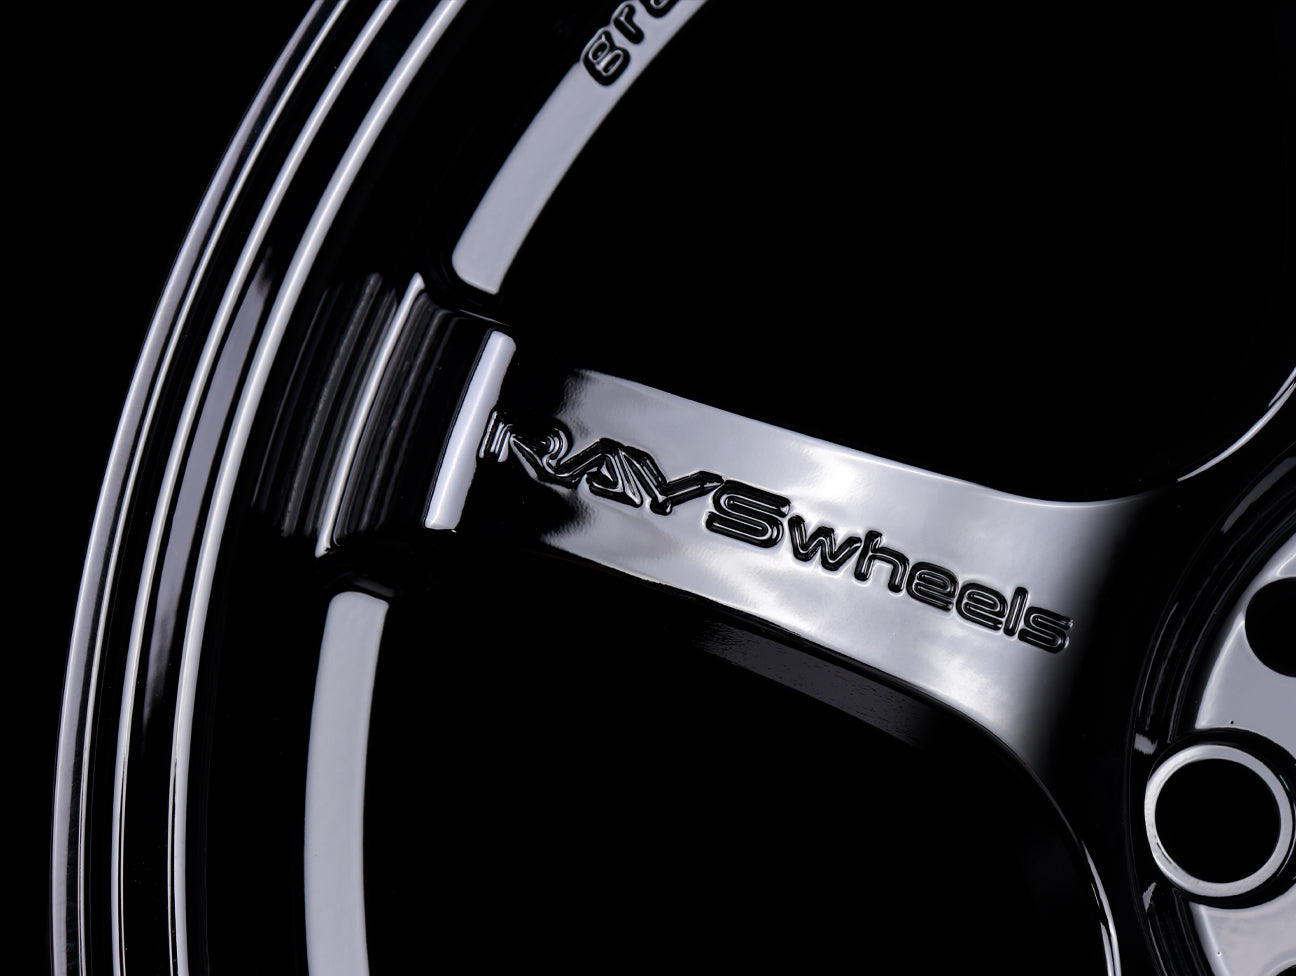 Rays Gram Lights 57DR Wheels - Gloss Black 17x9 / 5x114.3 / +38